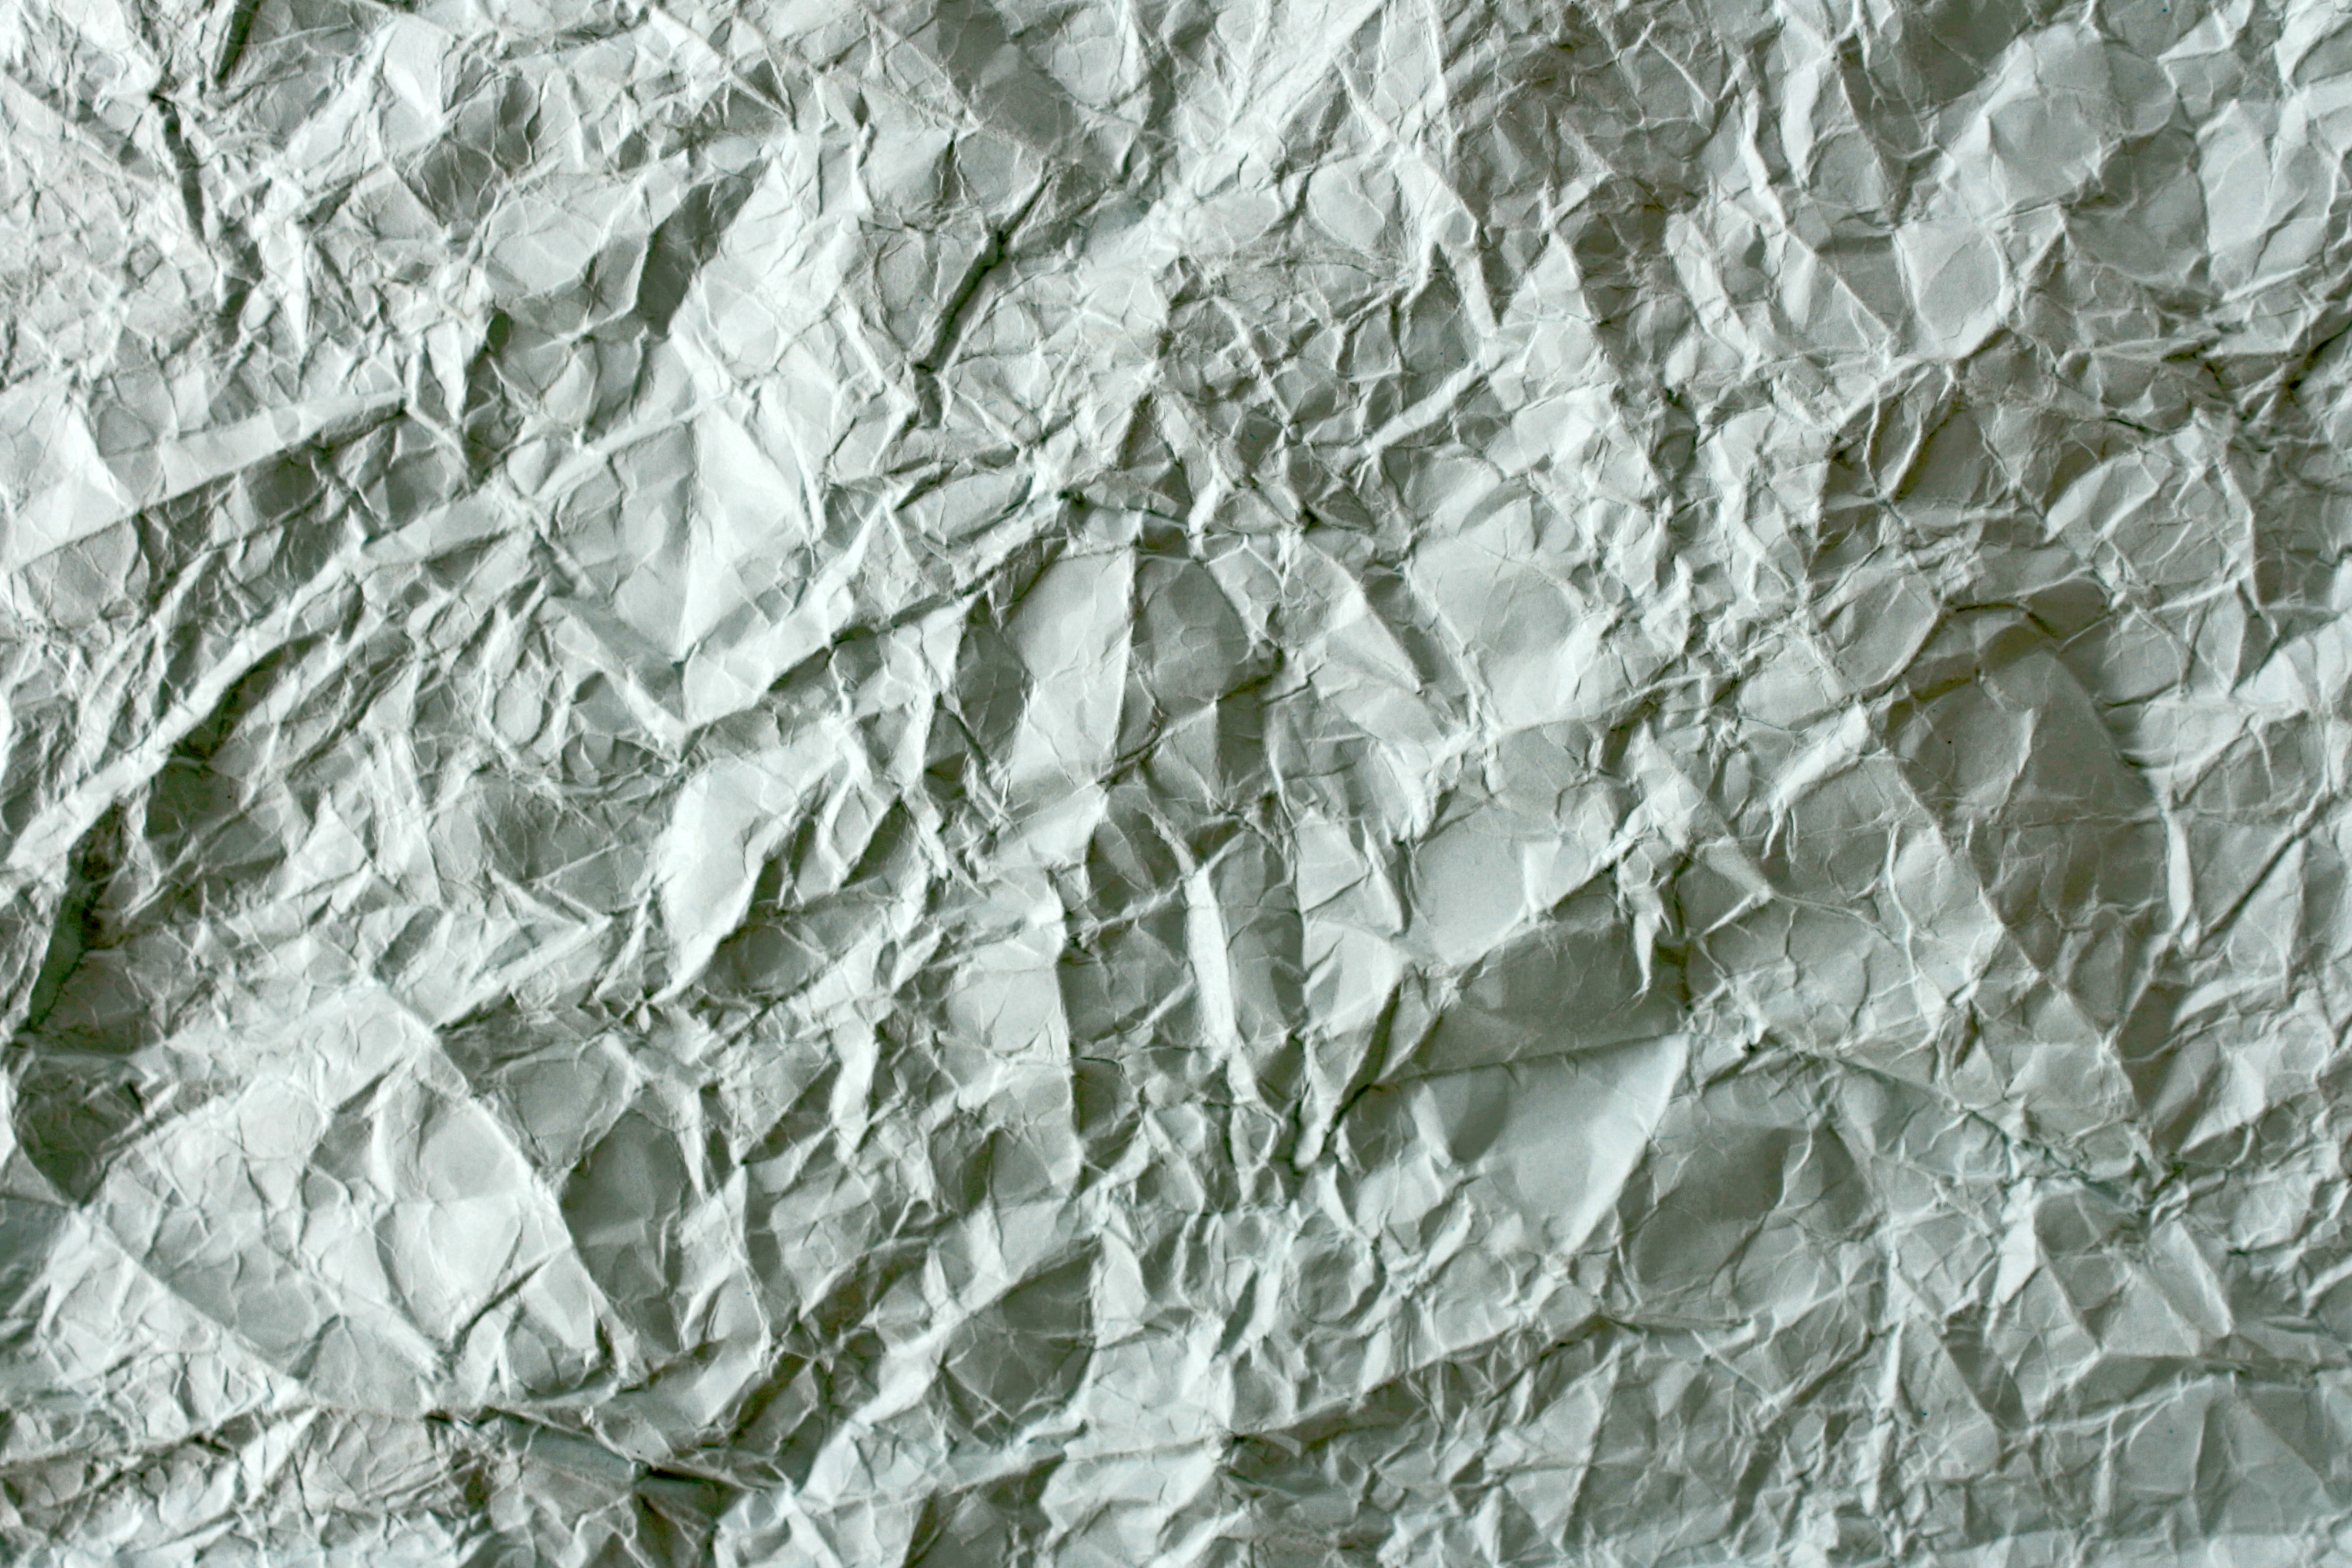 crumpled-paper-texture-image-free-stock-photo-public-domain-photo